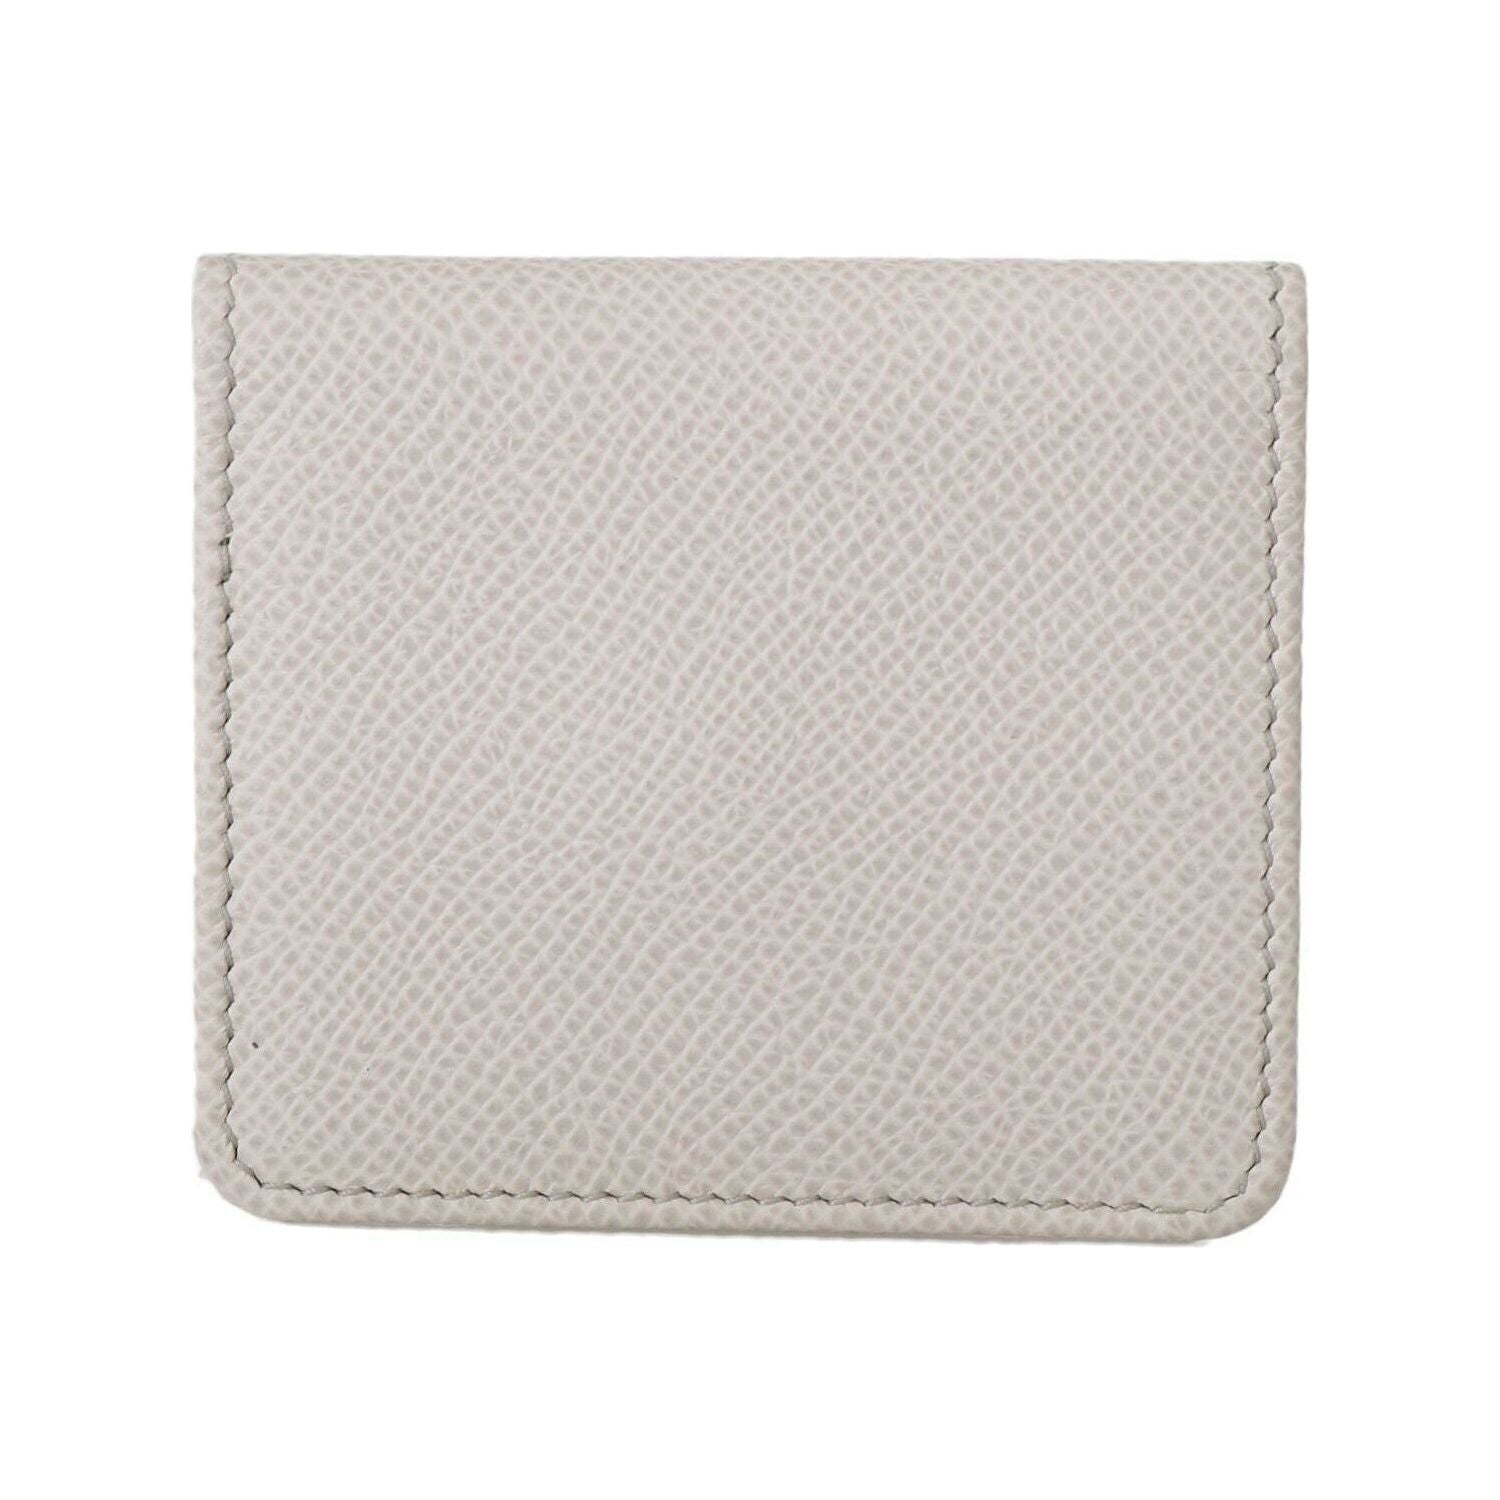 Dolce & Gabbana | White Dauphine Leather Holder Pocket Wallet Condom Case | McRichard Designer Brands